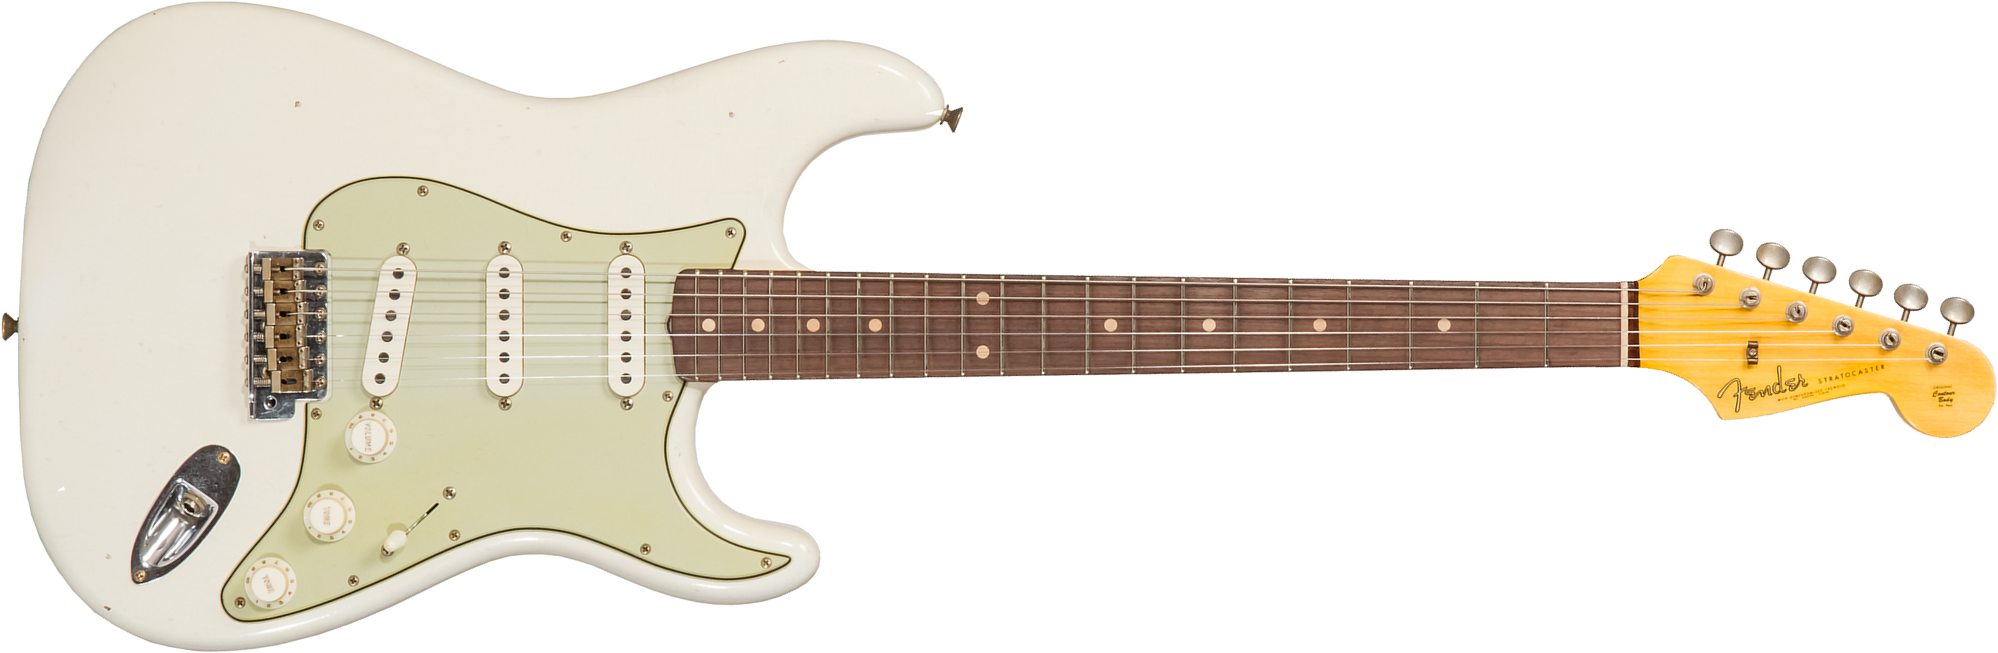 Fender Custom Shop Strat 1962/63 3s Trem Rw #cz565163 - Journeyman Relic Olympic White - Guitarra eléctrica con forma de str. - Main picture